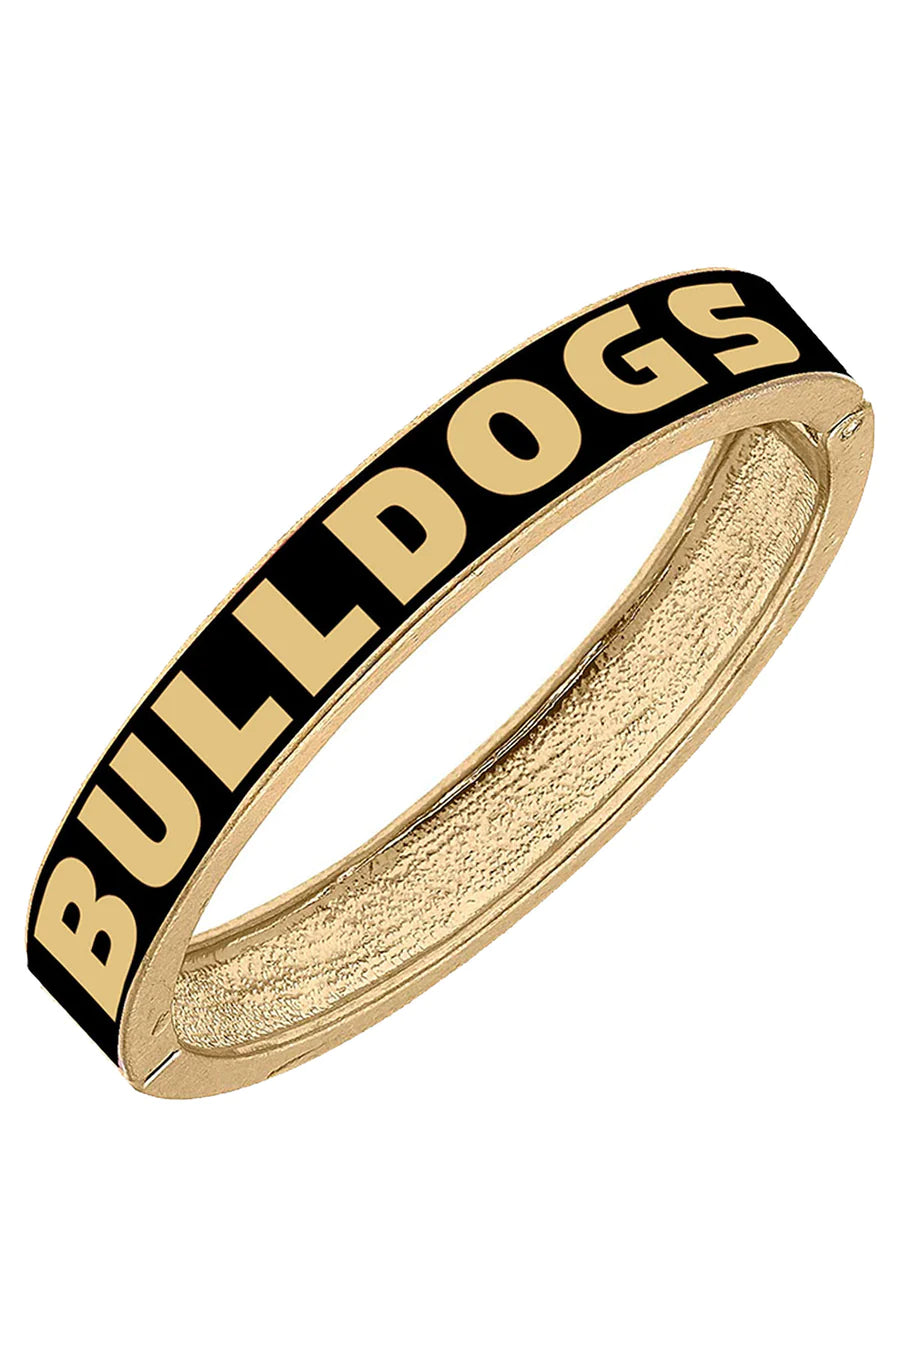 Georgia Bulldogs Enamel Hinge Bangle